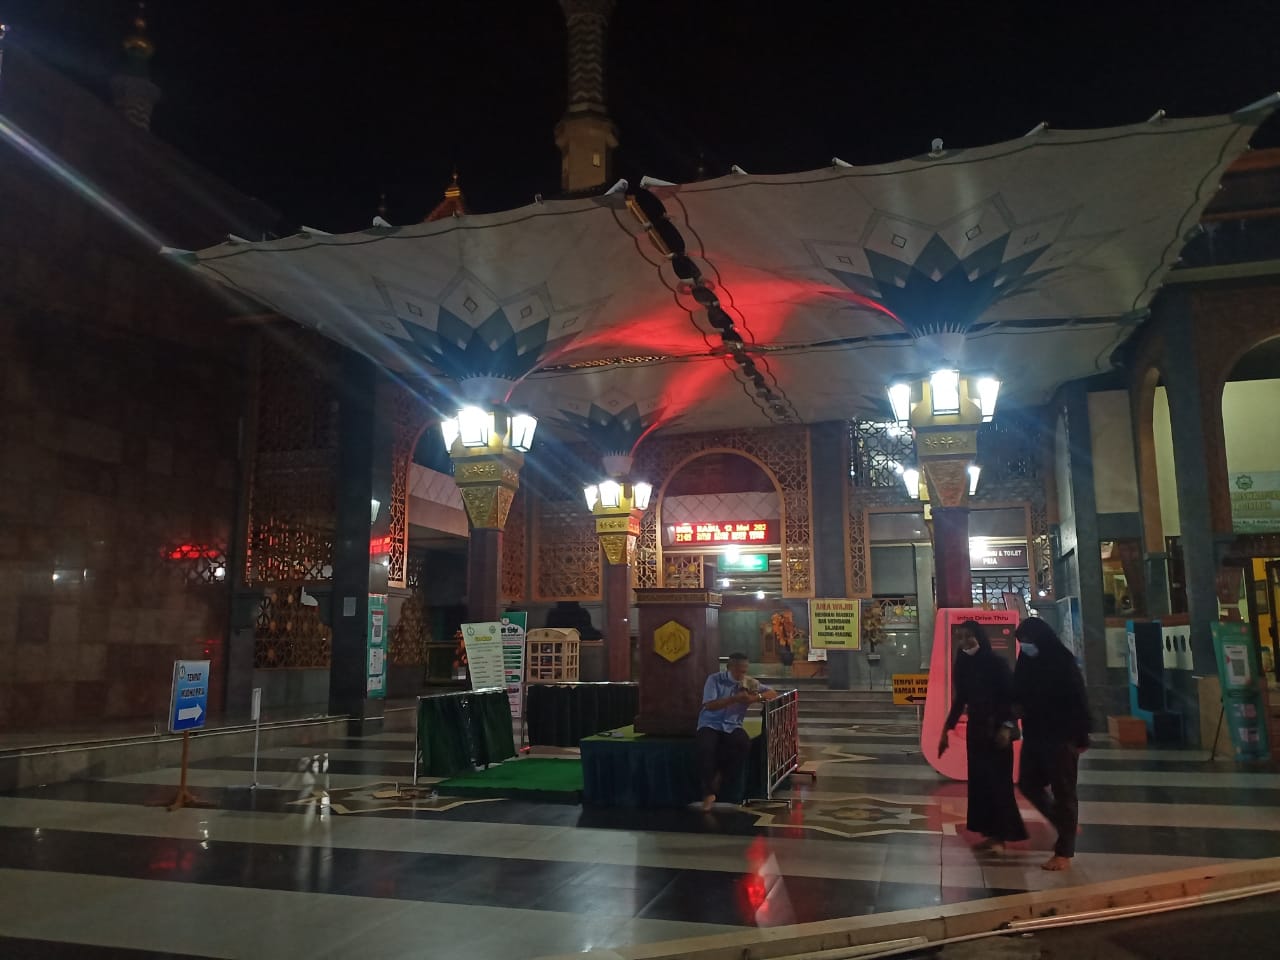 Halaman Masjid At Taqwa Sudah Dipersiapkan untuk Salat Id